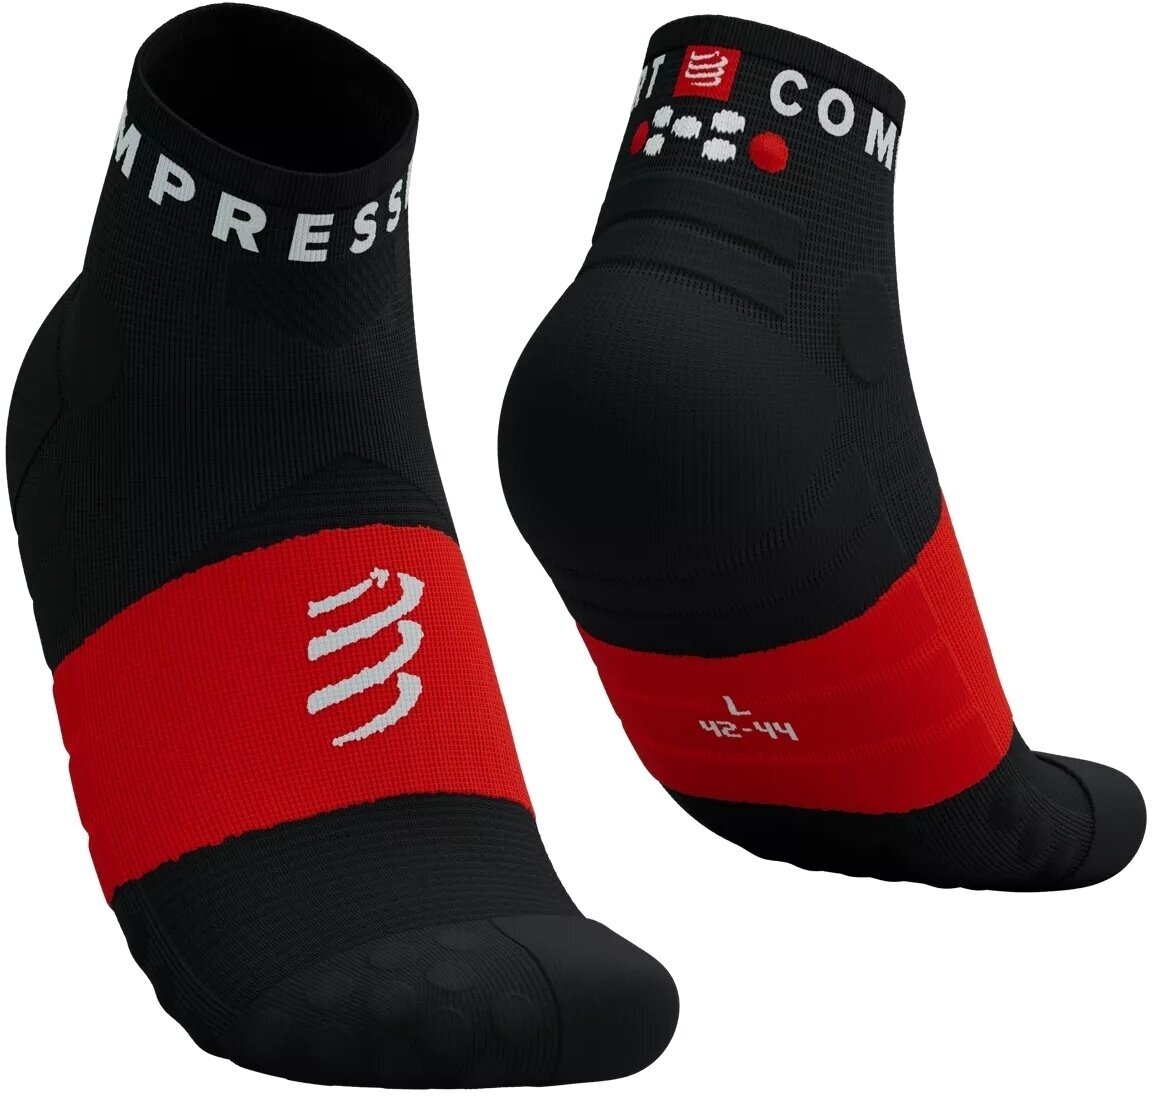 Skarpety do biegania
 Compressport Ultra Trail Low Socks Black/White/Core Red T4 Skarpety do biegania